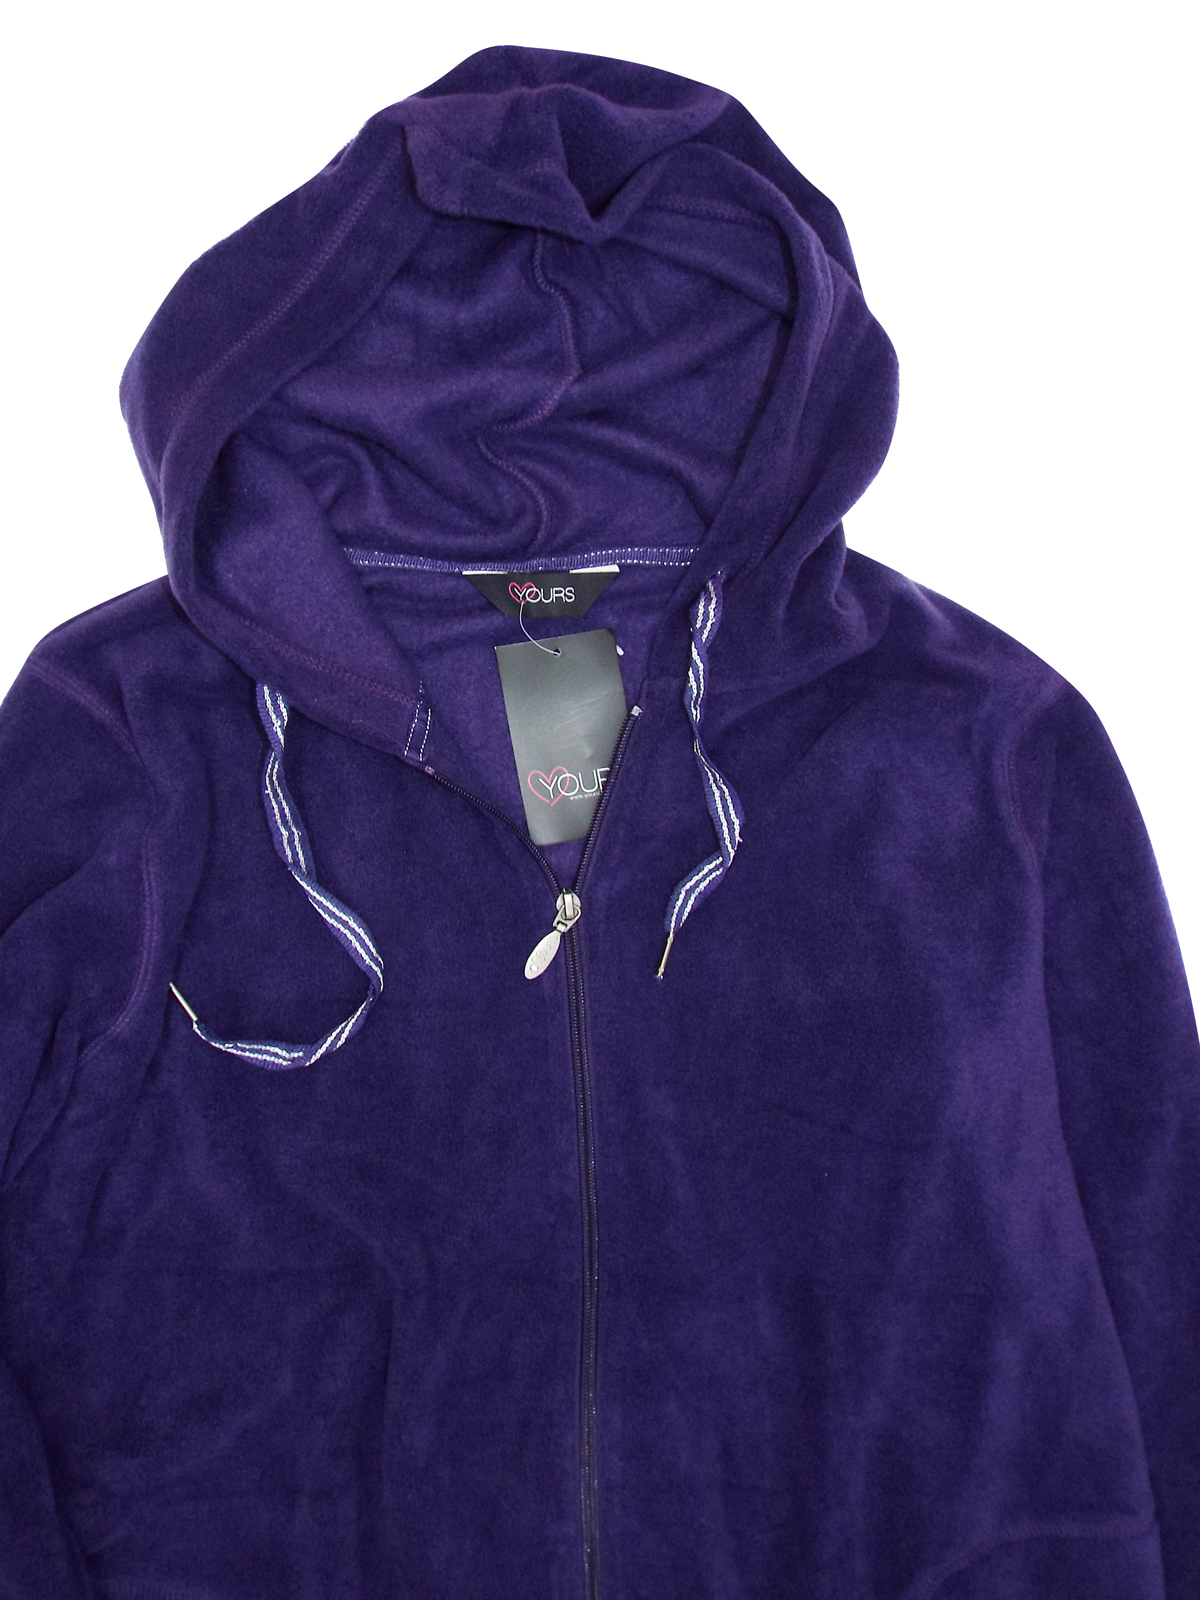 CURVE - - PURPLE Hooded Fleece Jacket - Plus Size 18 to 26/28